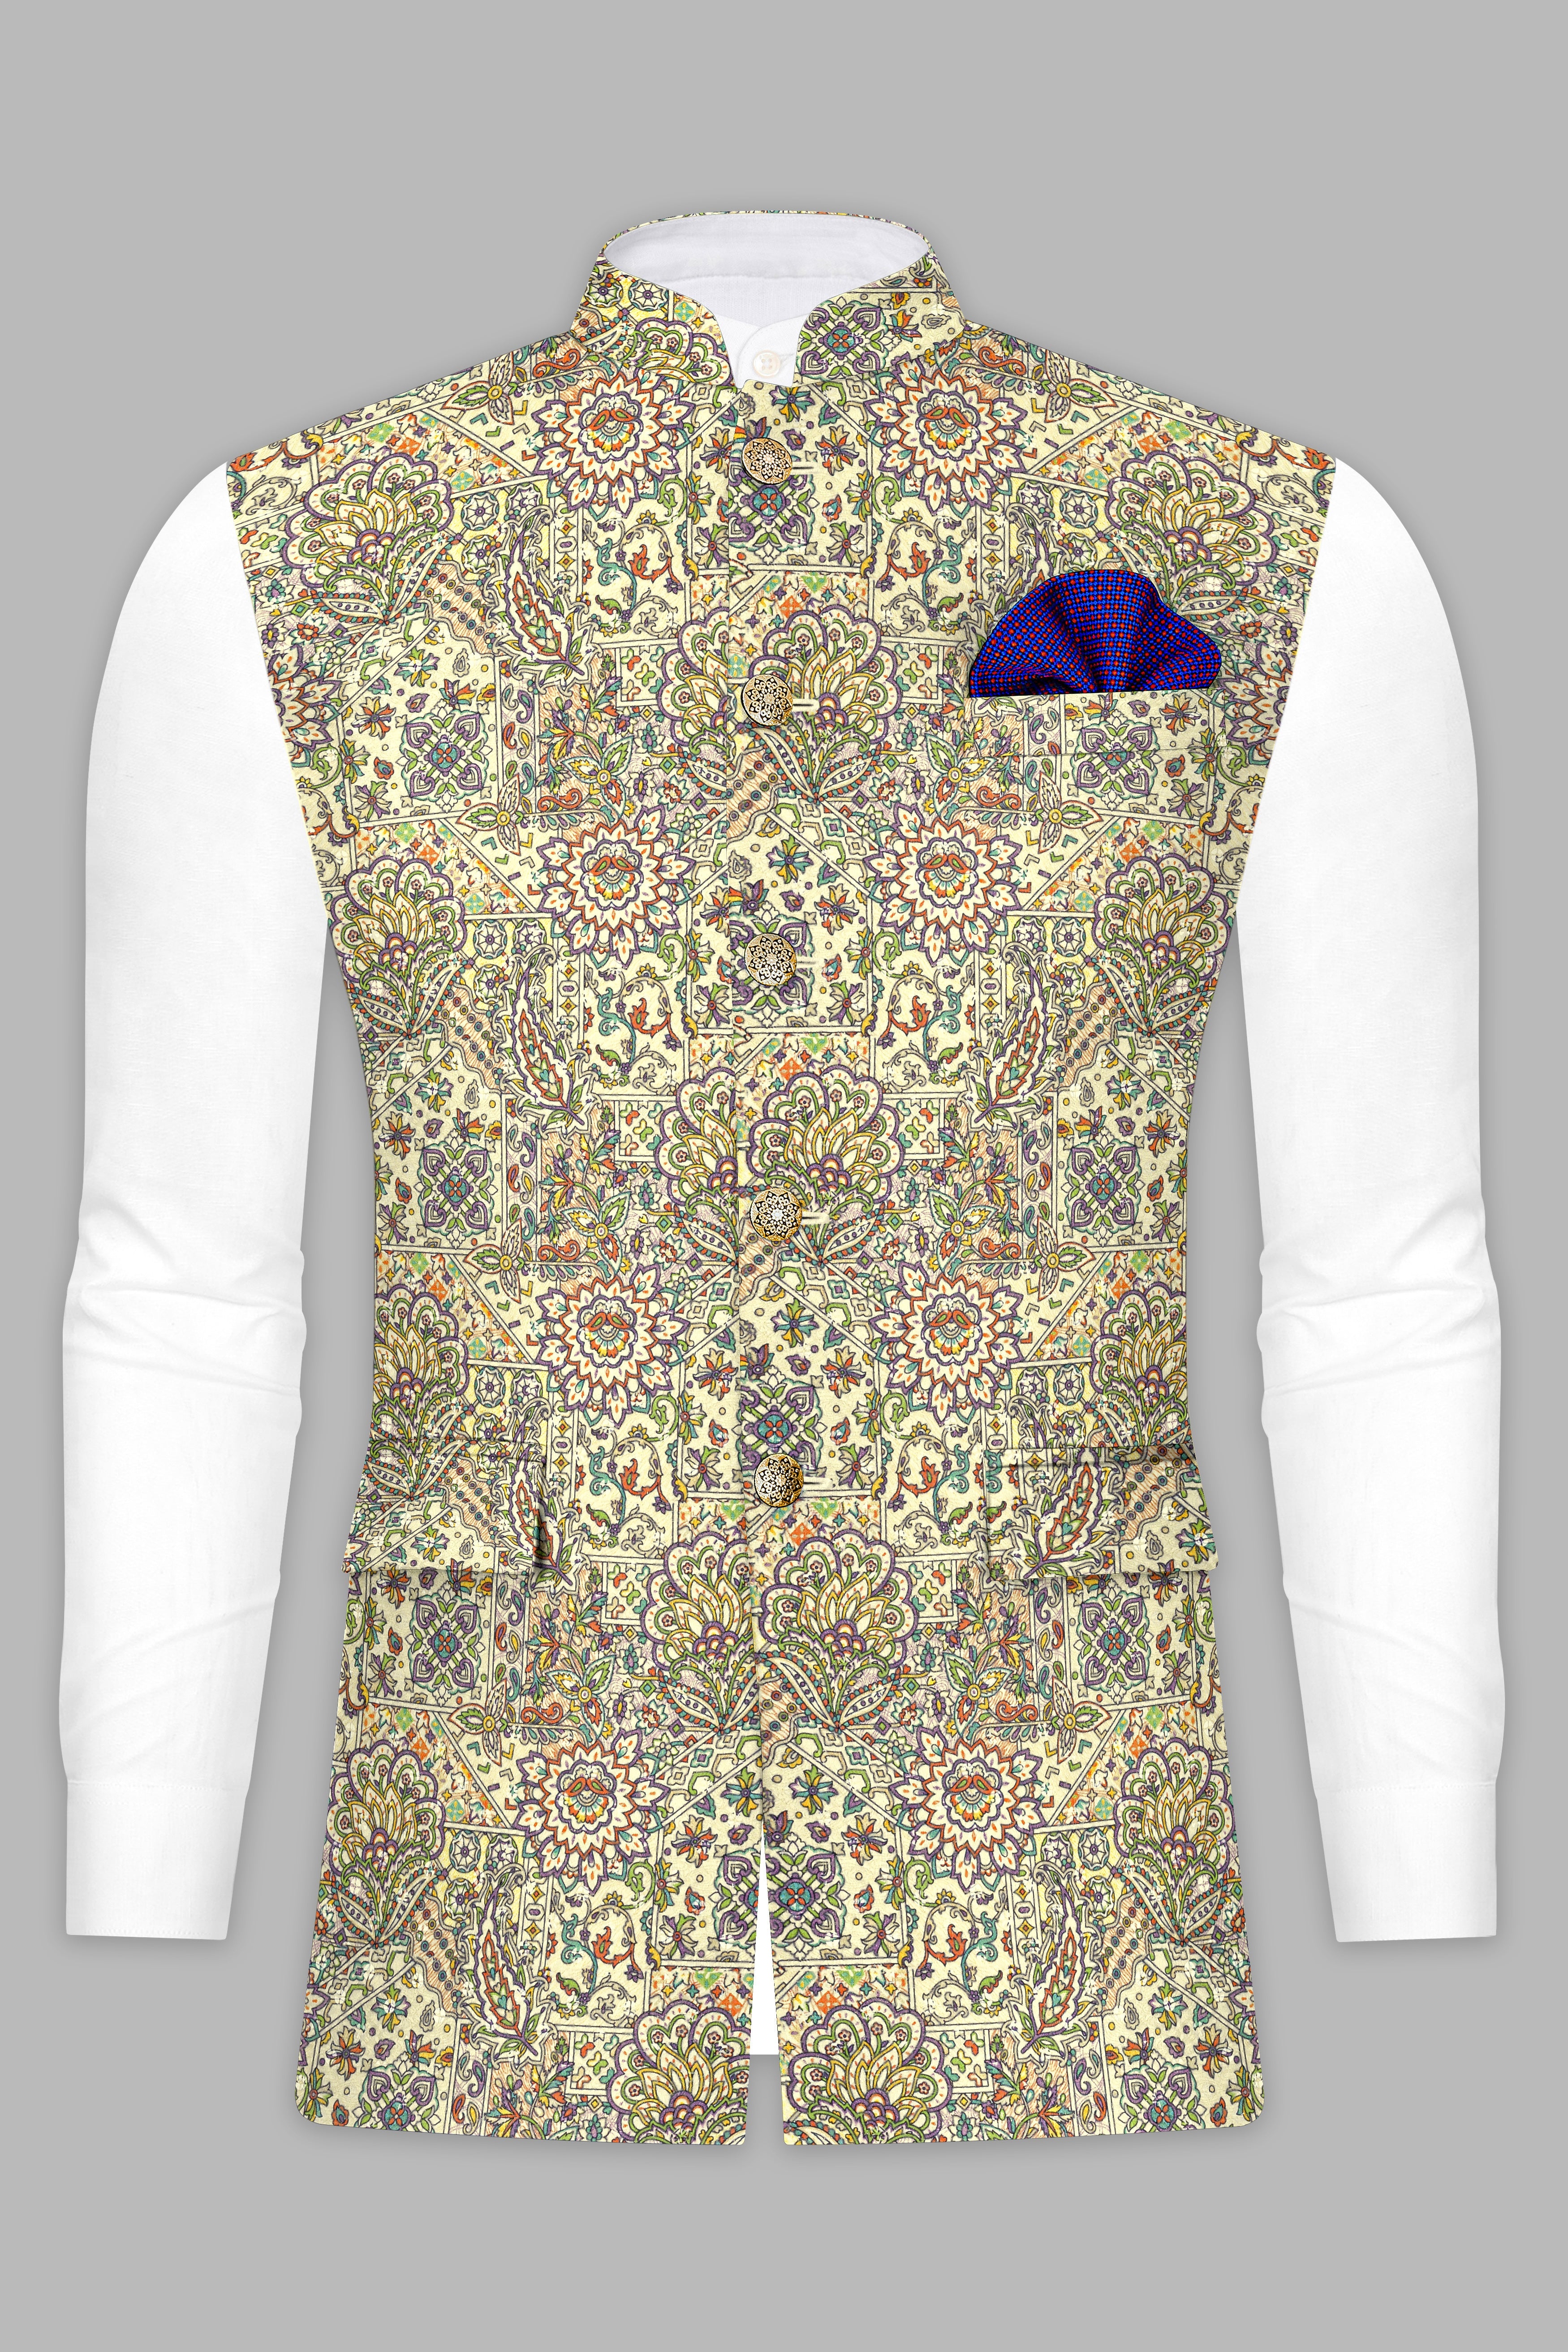 Eggshell Cream And Faded Purple MultiColour Embroidered Nehru Jacket